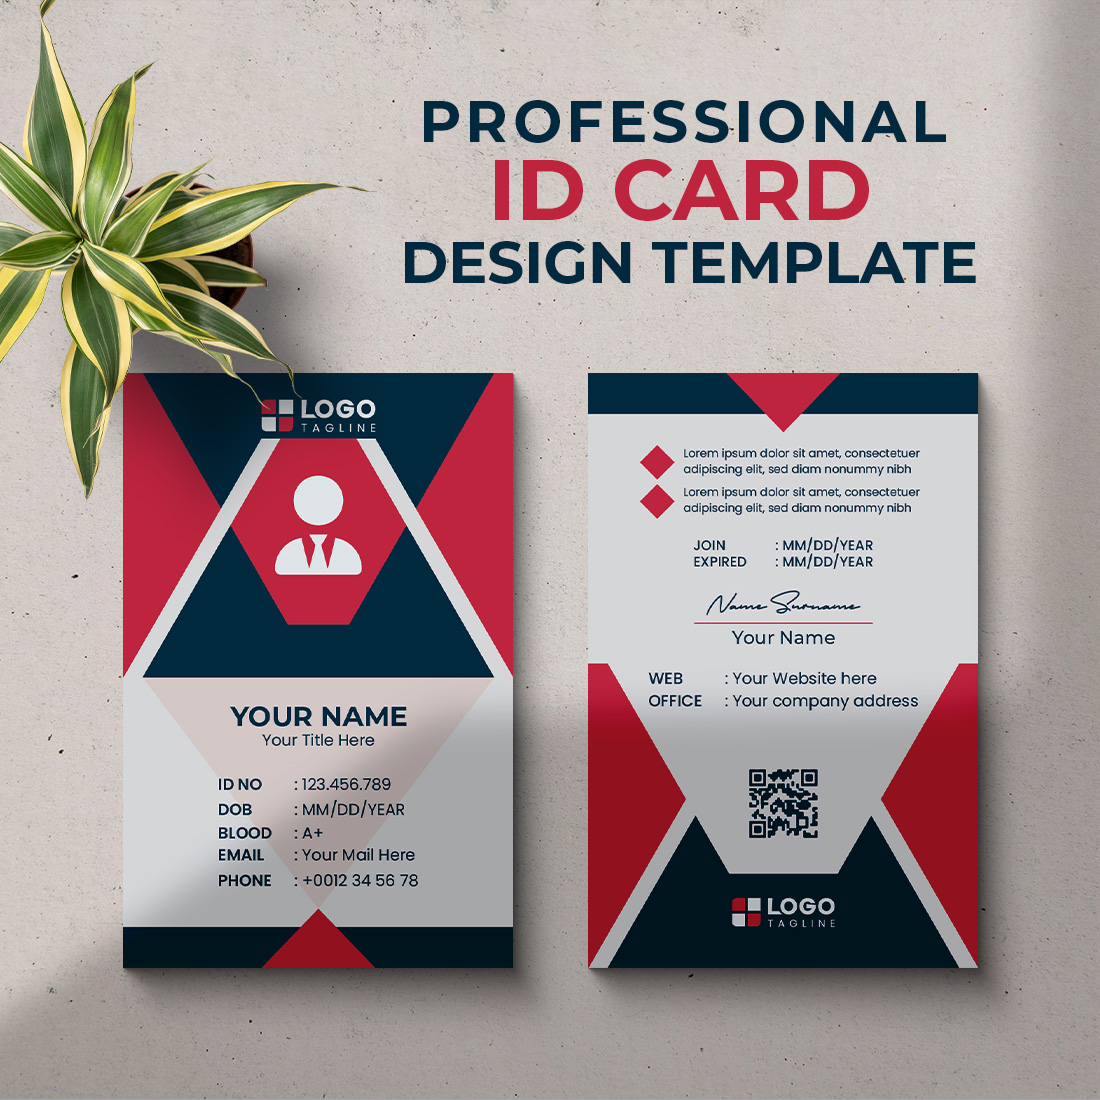 Creative Modern Unique Id Card Design Template main cover